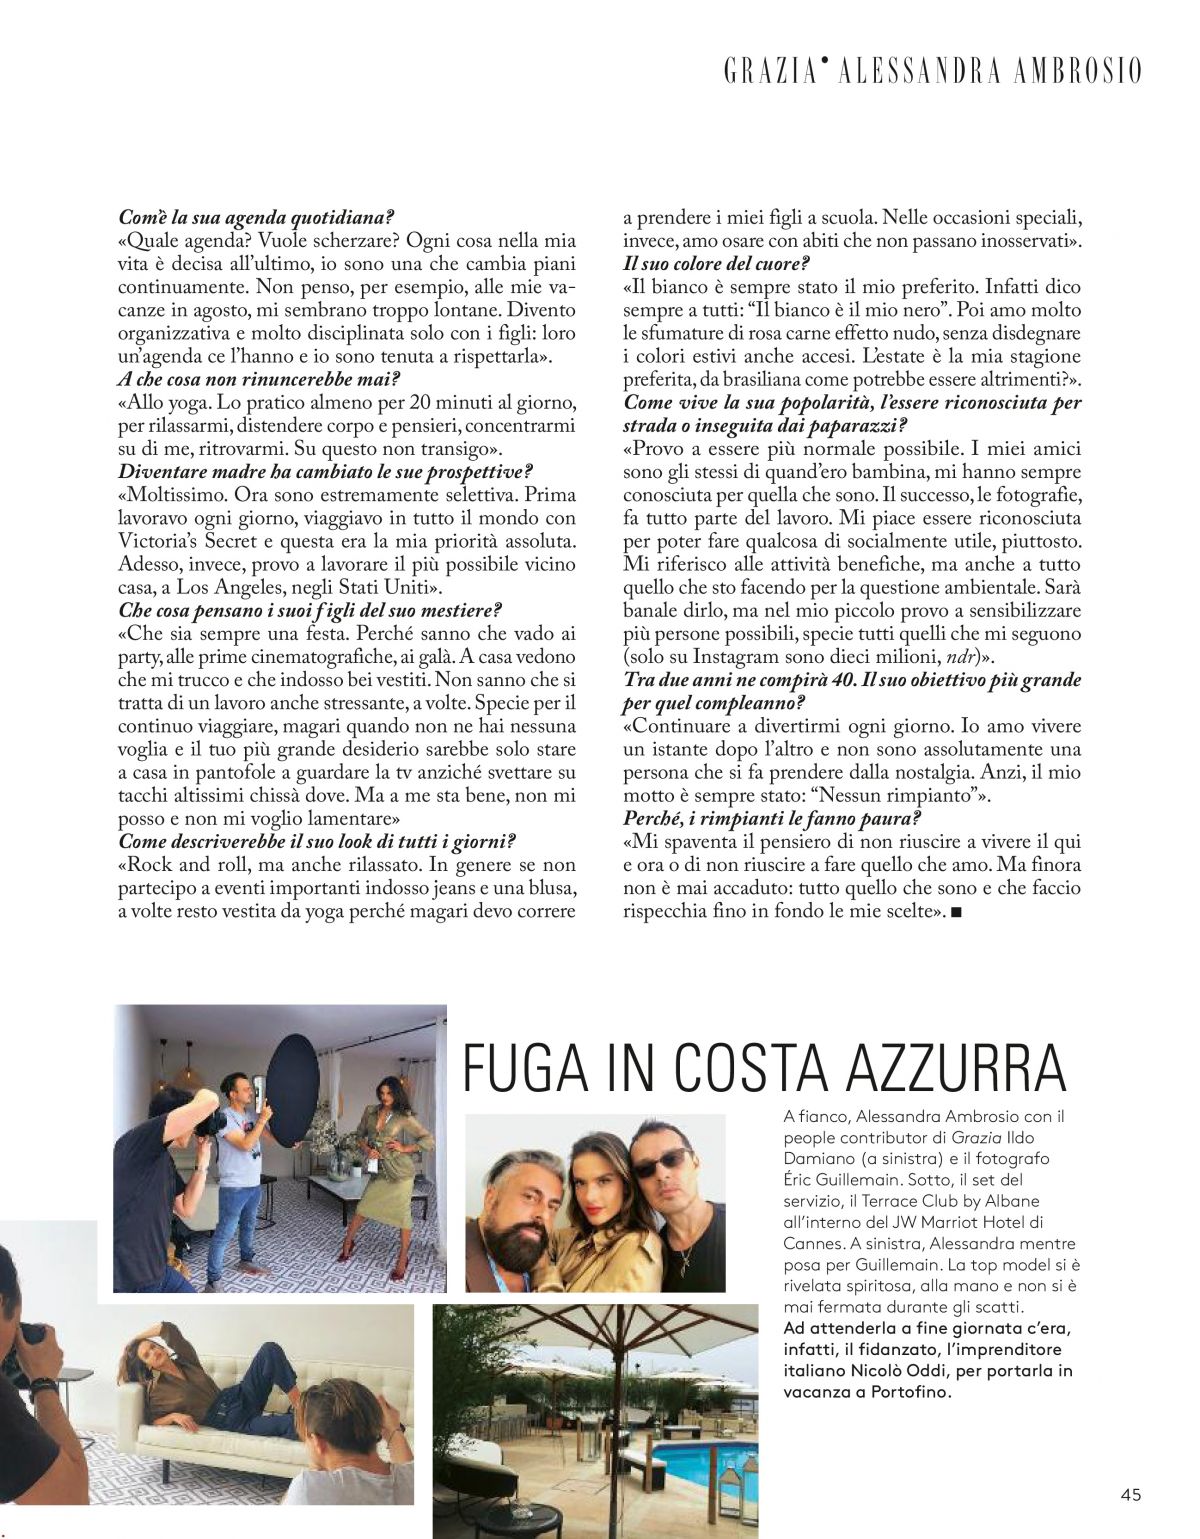 alessandra-ambrosio-in-grazia-magazine-italy-july-2019-4.jpg